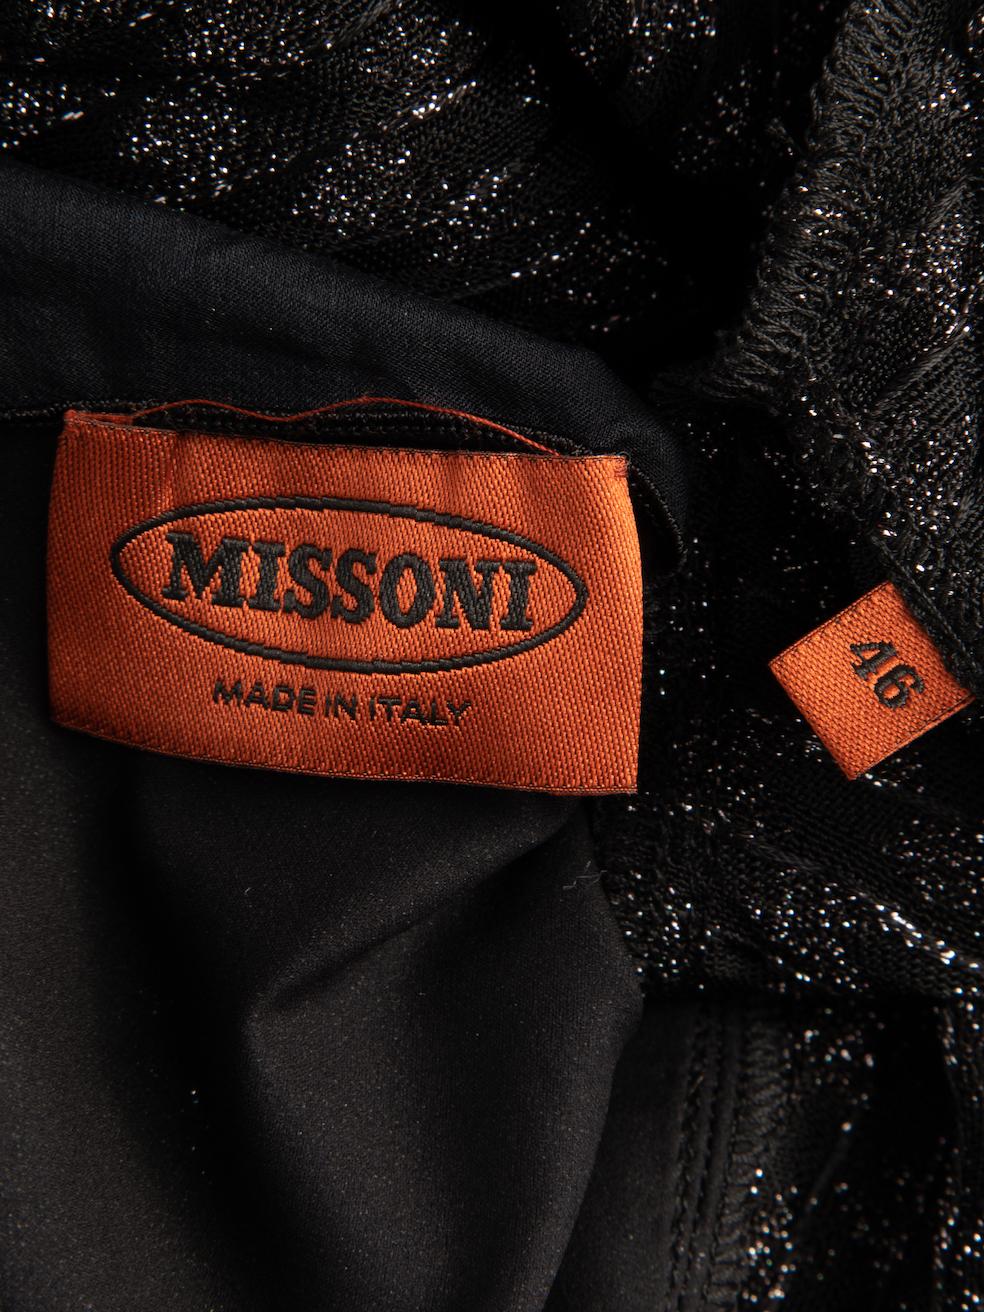 Women's Black Mesh Neckline Metallic Houndstooth Top Size XL For Sale